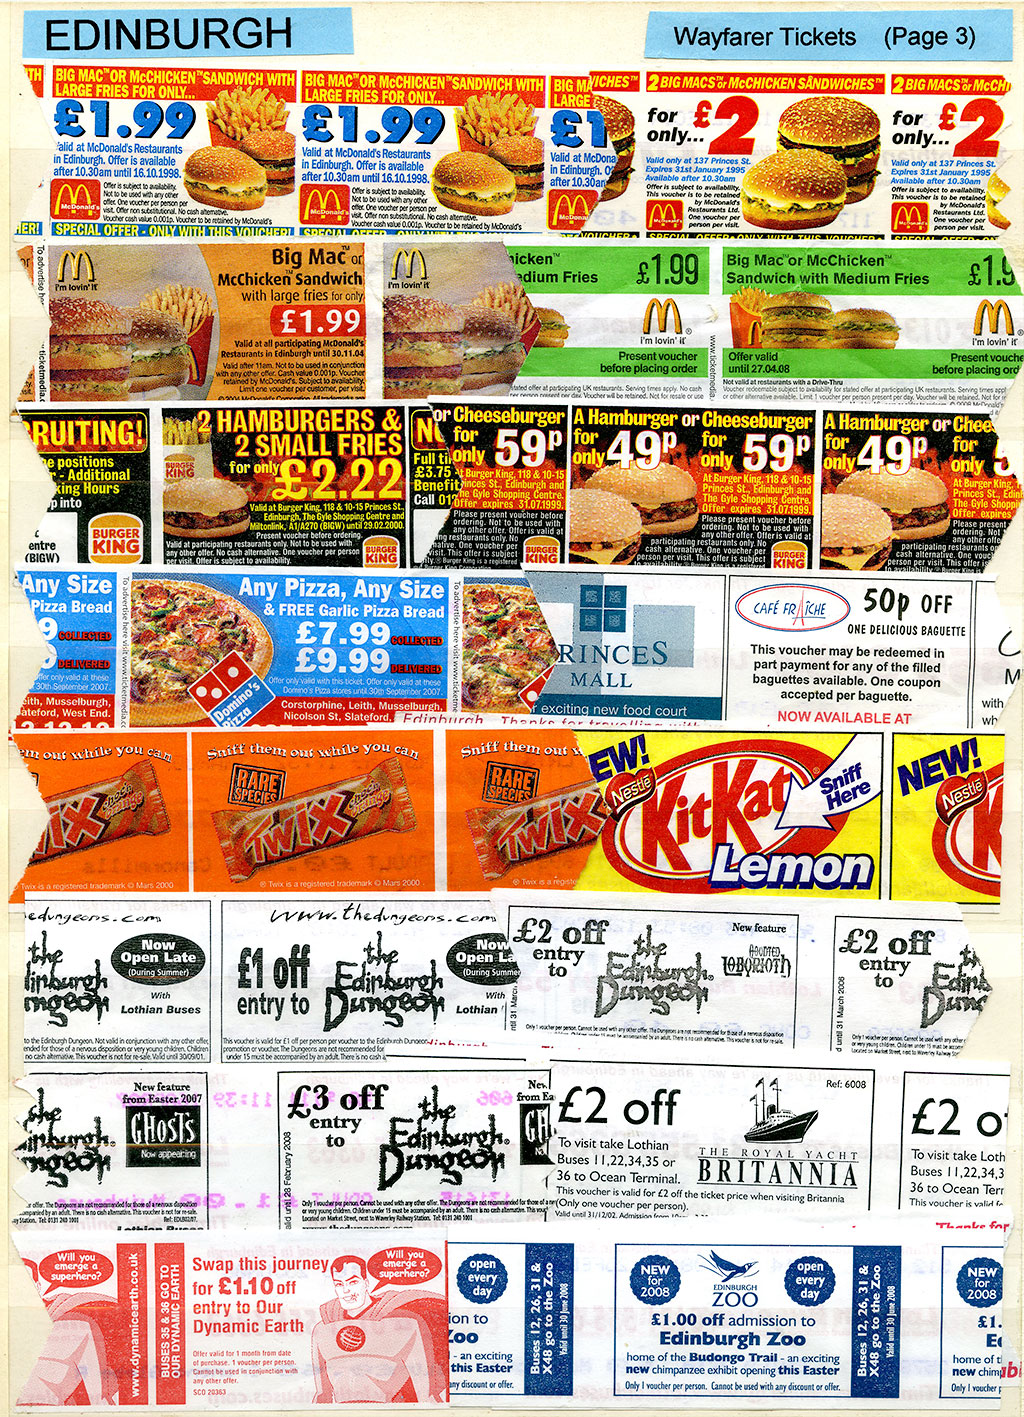 A Selection of adverts on the backs of Edinburghh Wayfarer Tickets  -  1980s-2000s